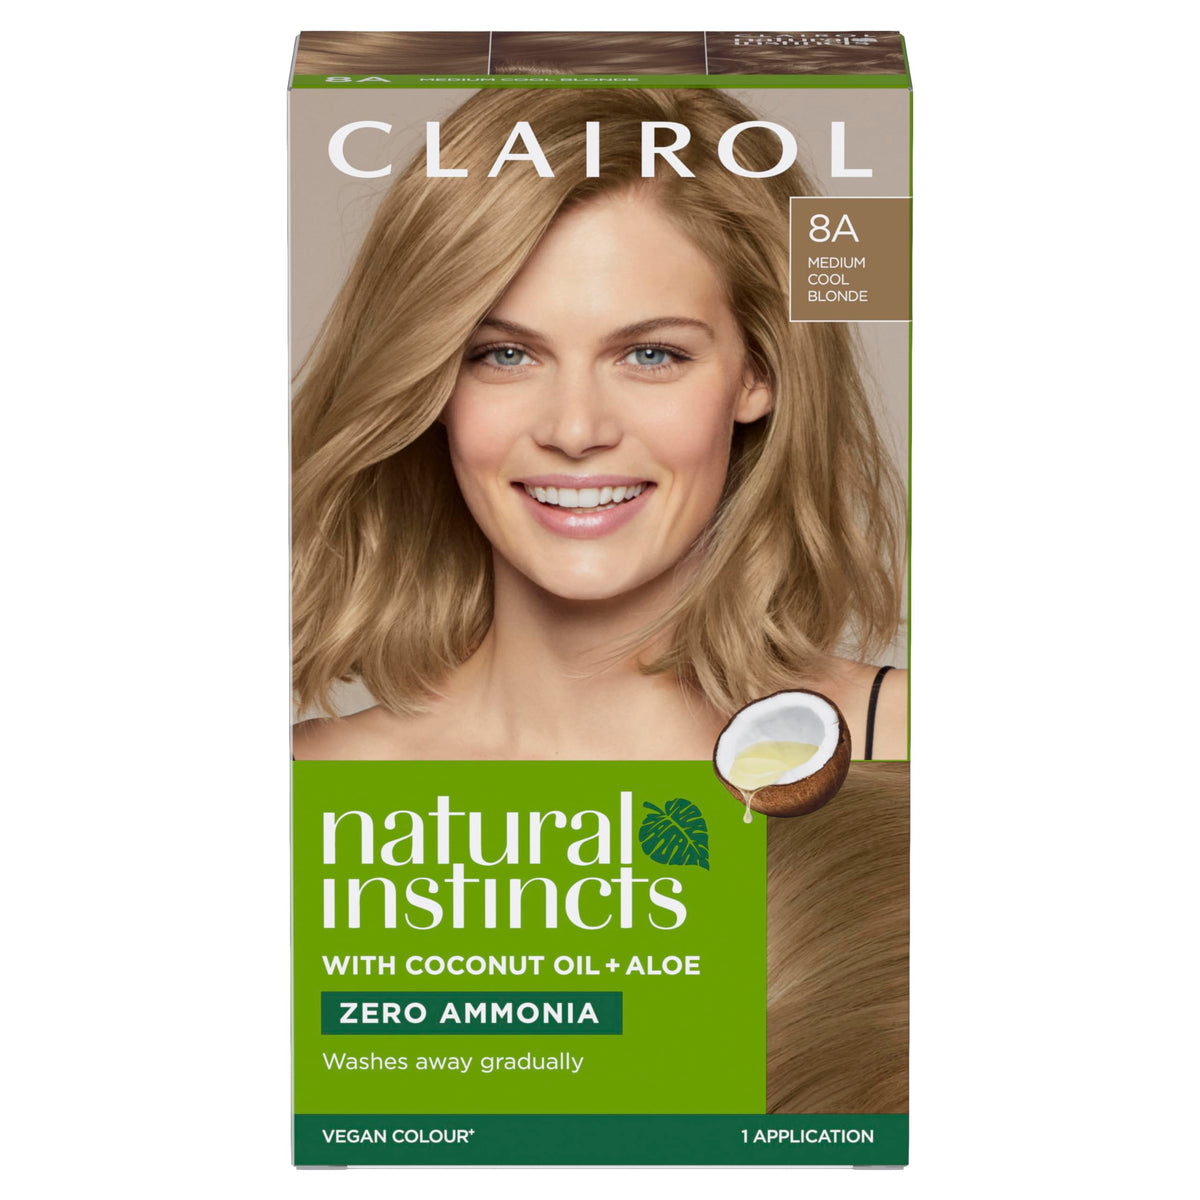 Clairol Natural Instincts Semi-Permanent No Ammonia Hair Dye, 8A Medium Cool Blonde (Packing May Vary)